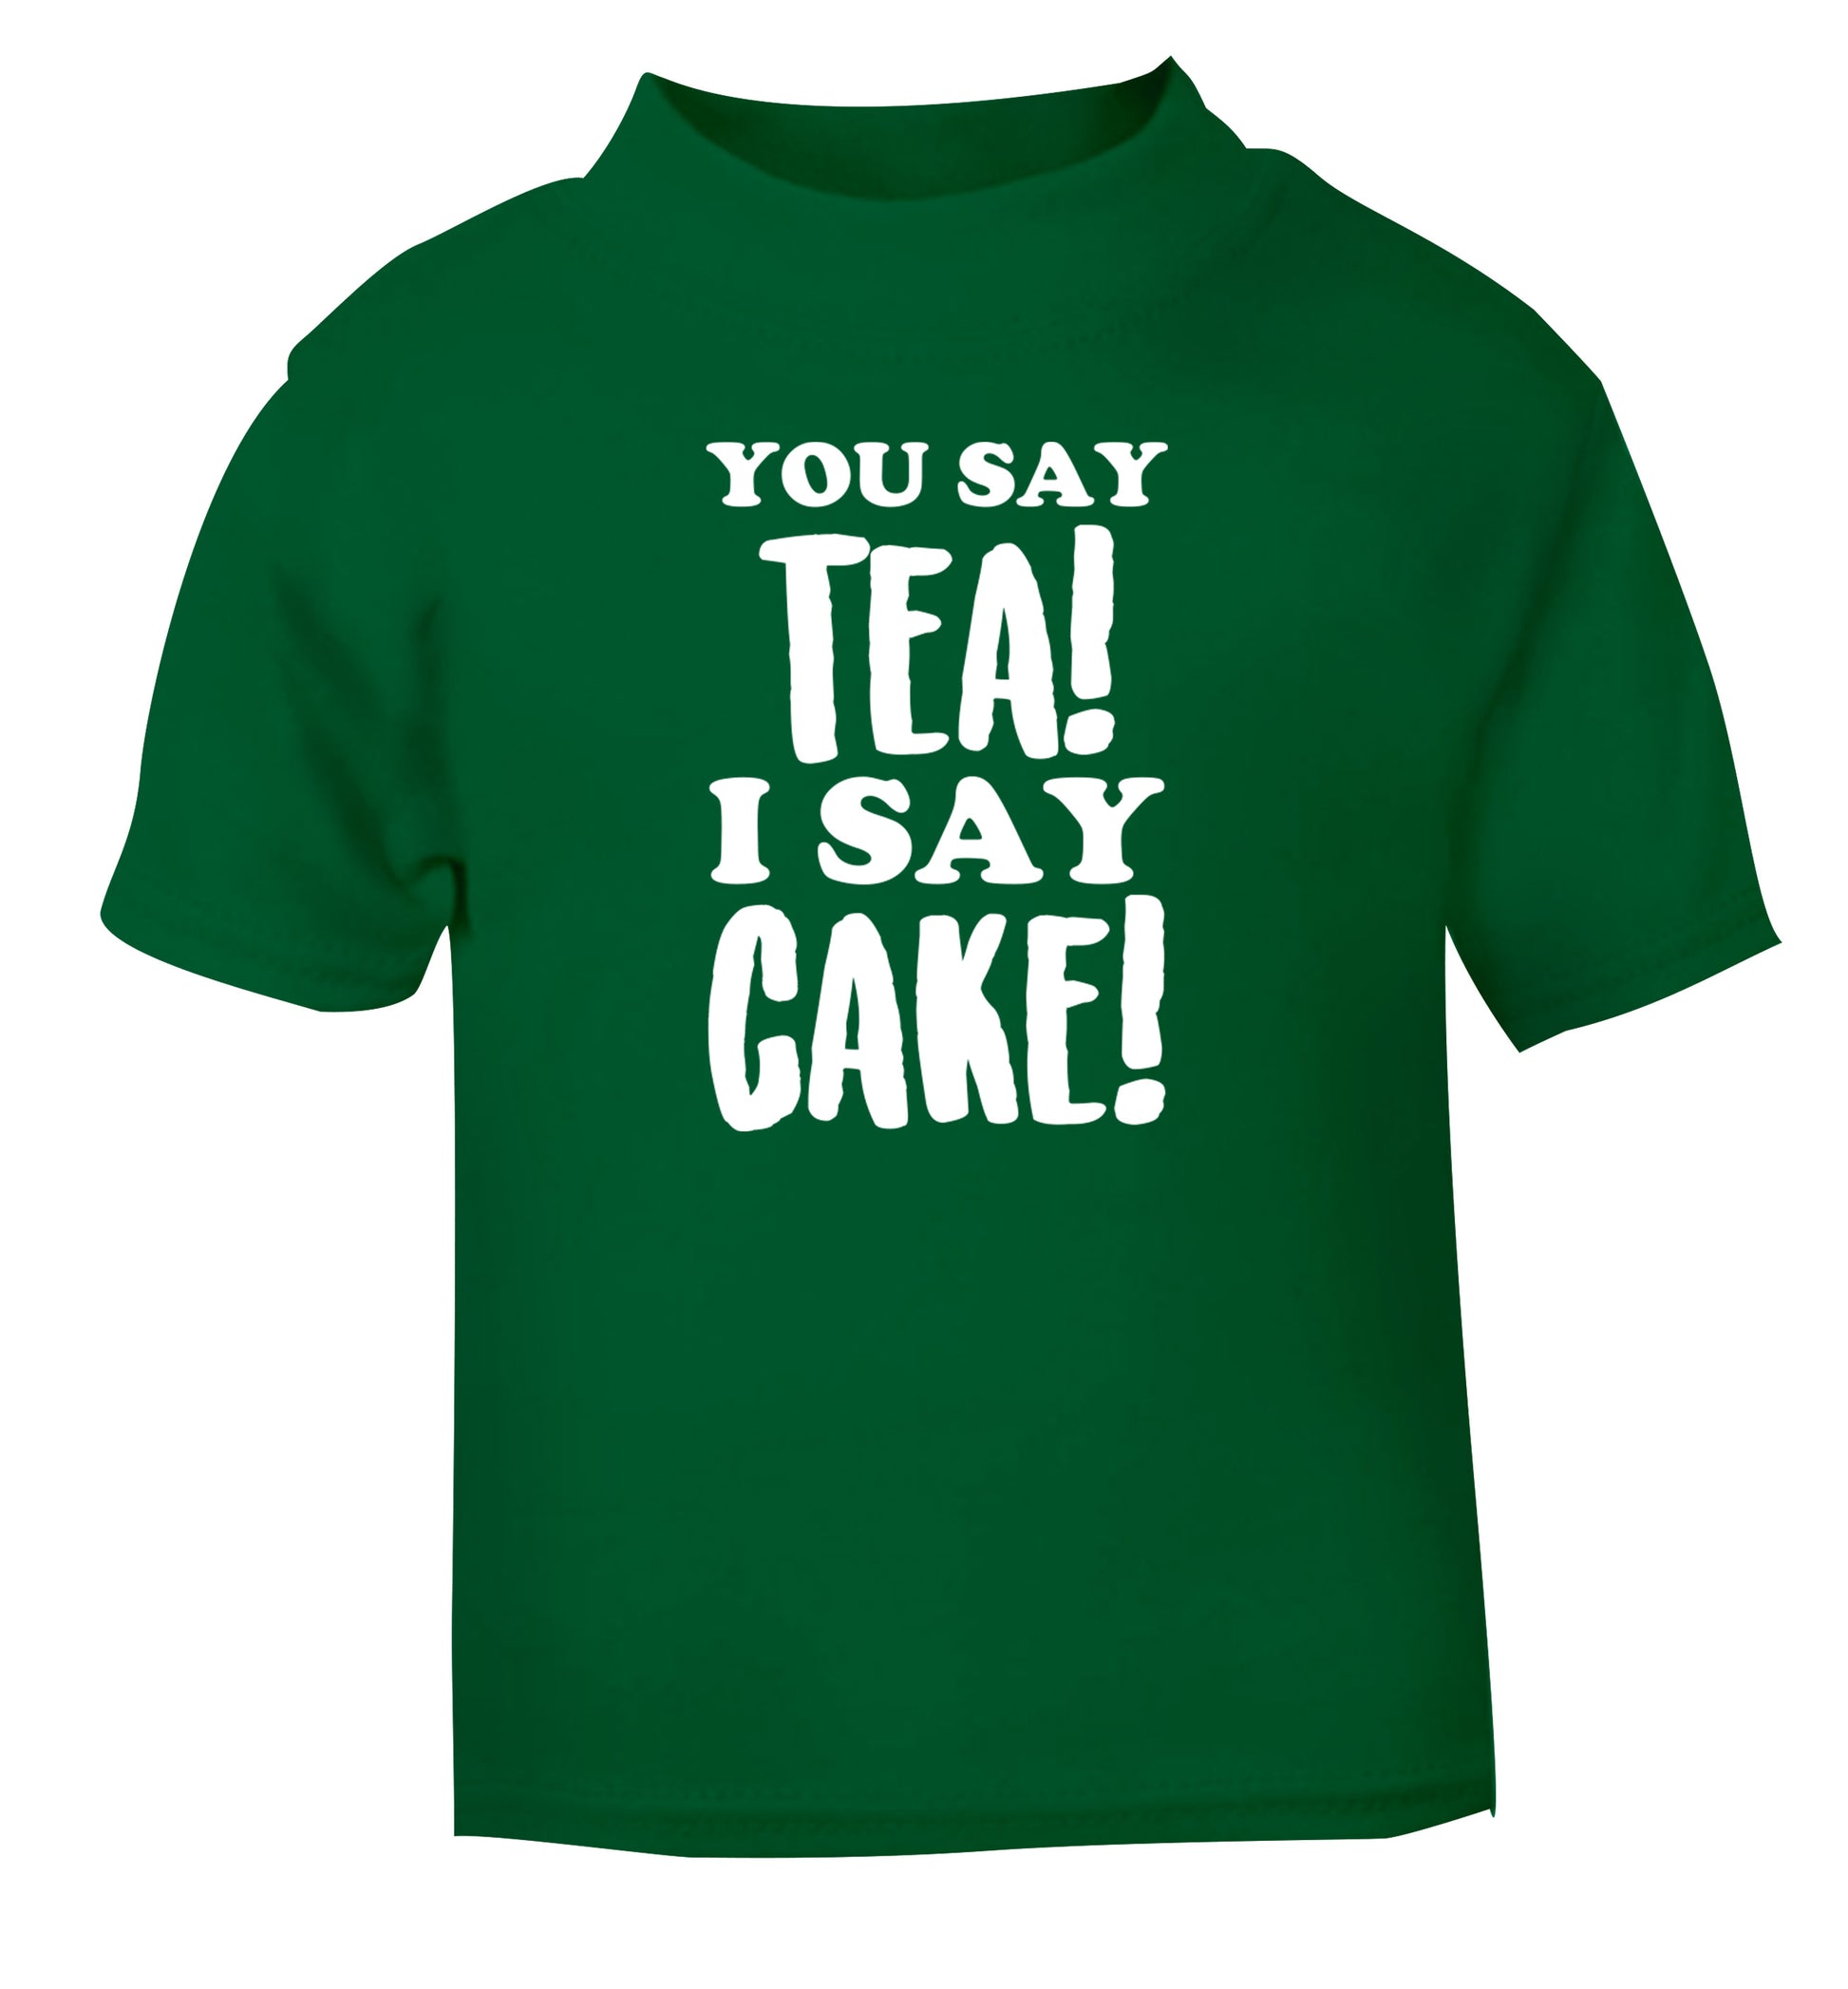 You say tea I say cake! green Baby Toddler Tshirt 2 Years